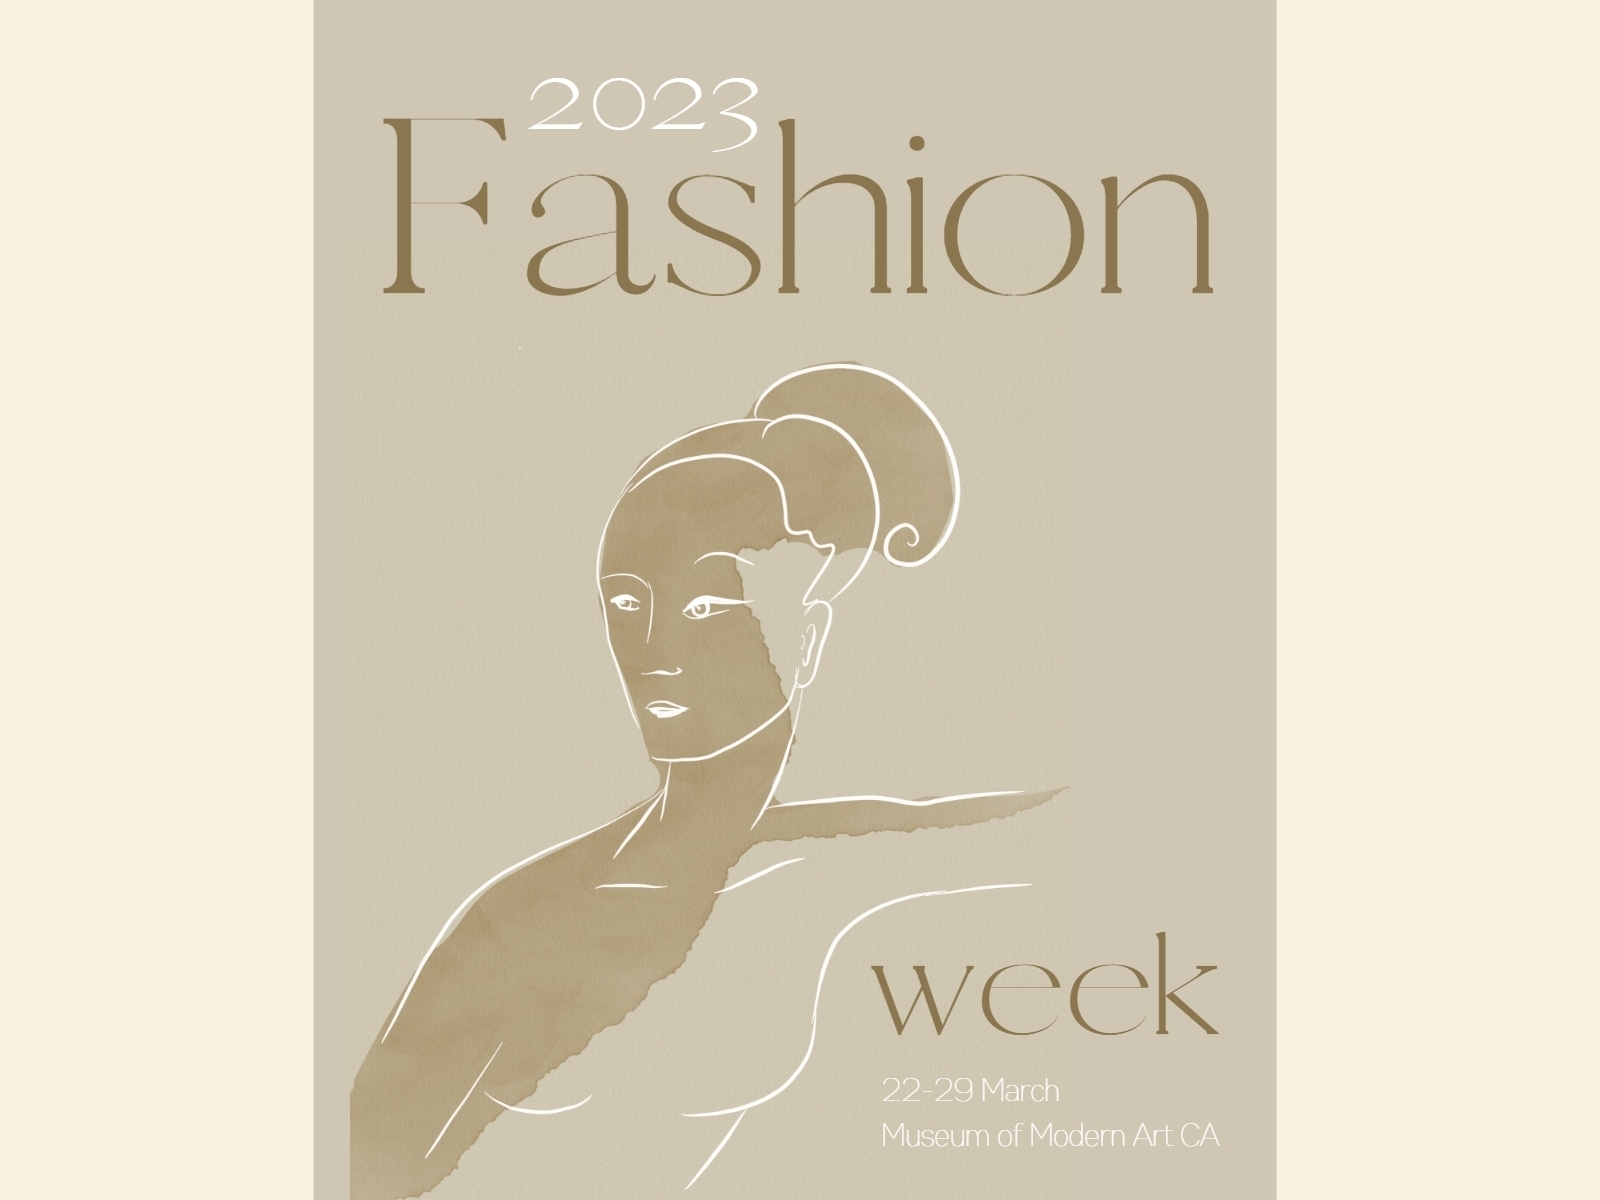 Fashion Week poster 2023 by Jo Petroni on Dribbble